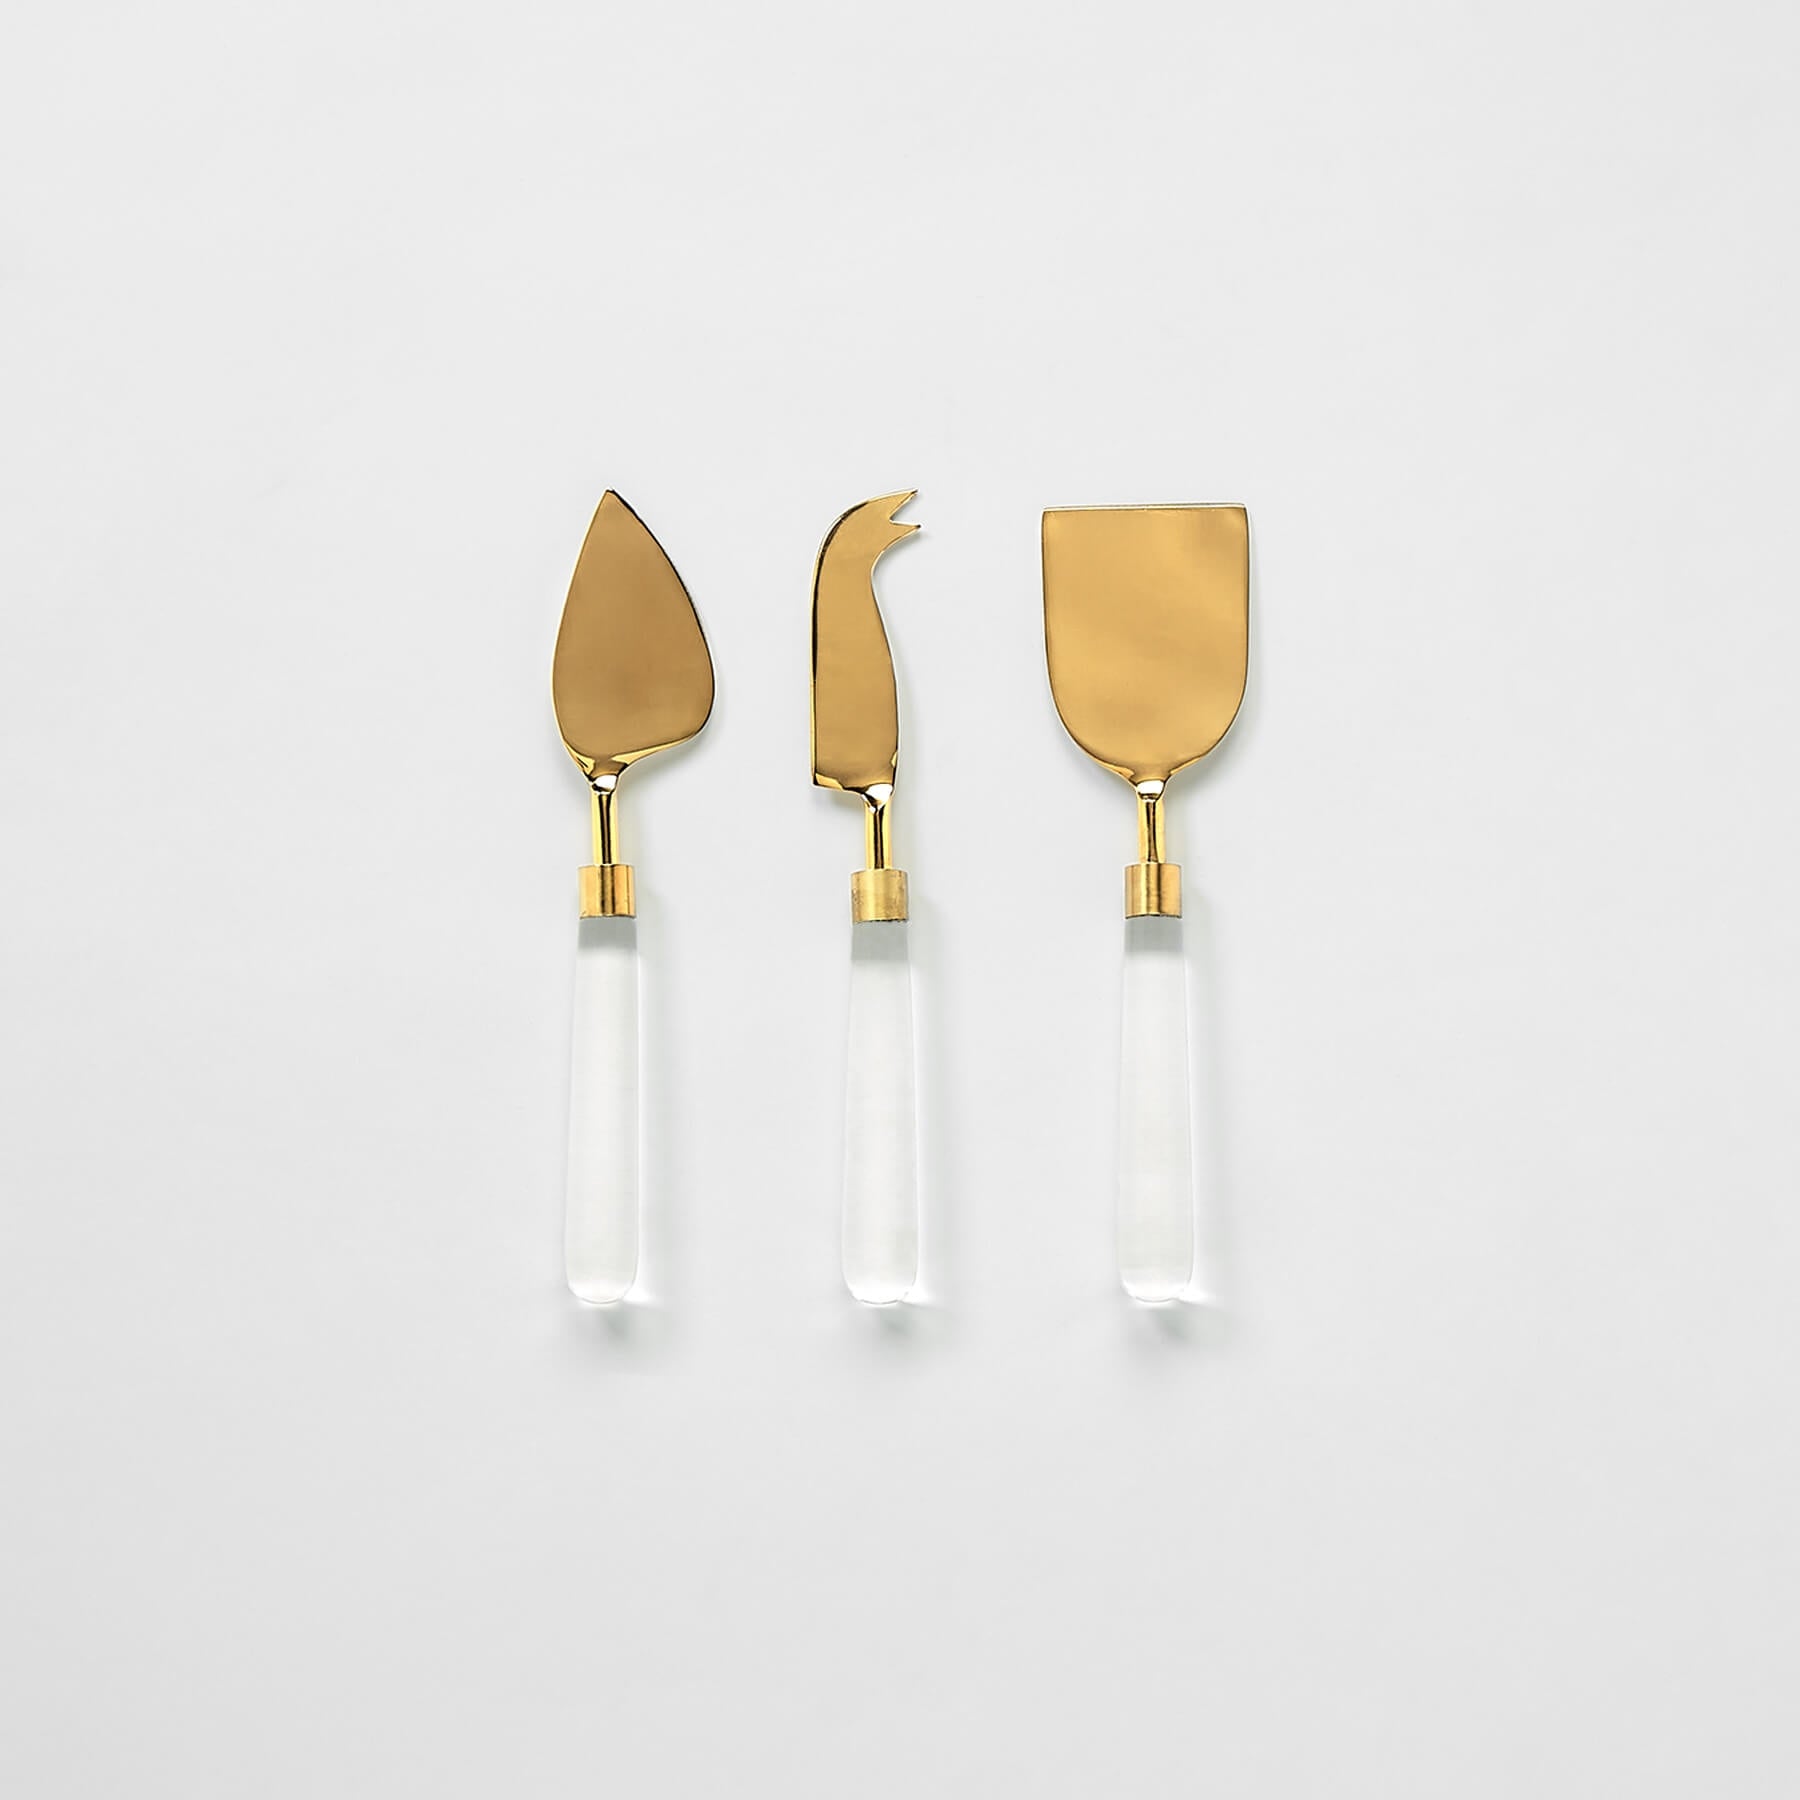 Acrylic & Gold Cheese Knives Set